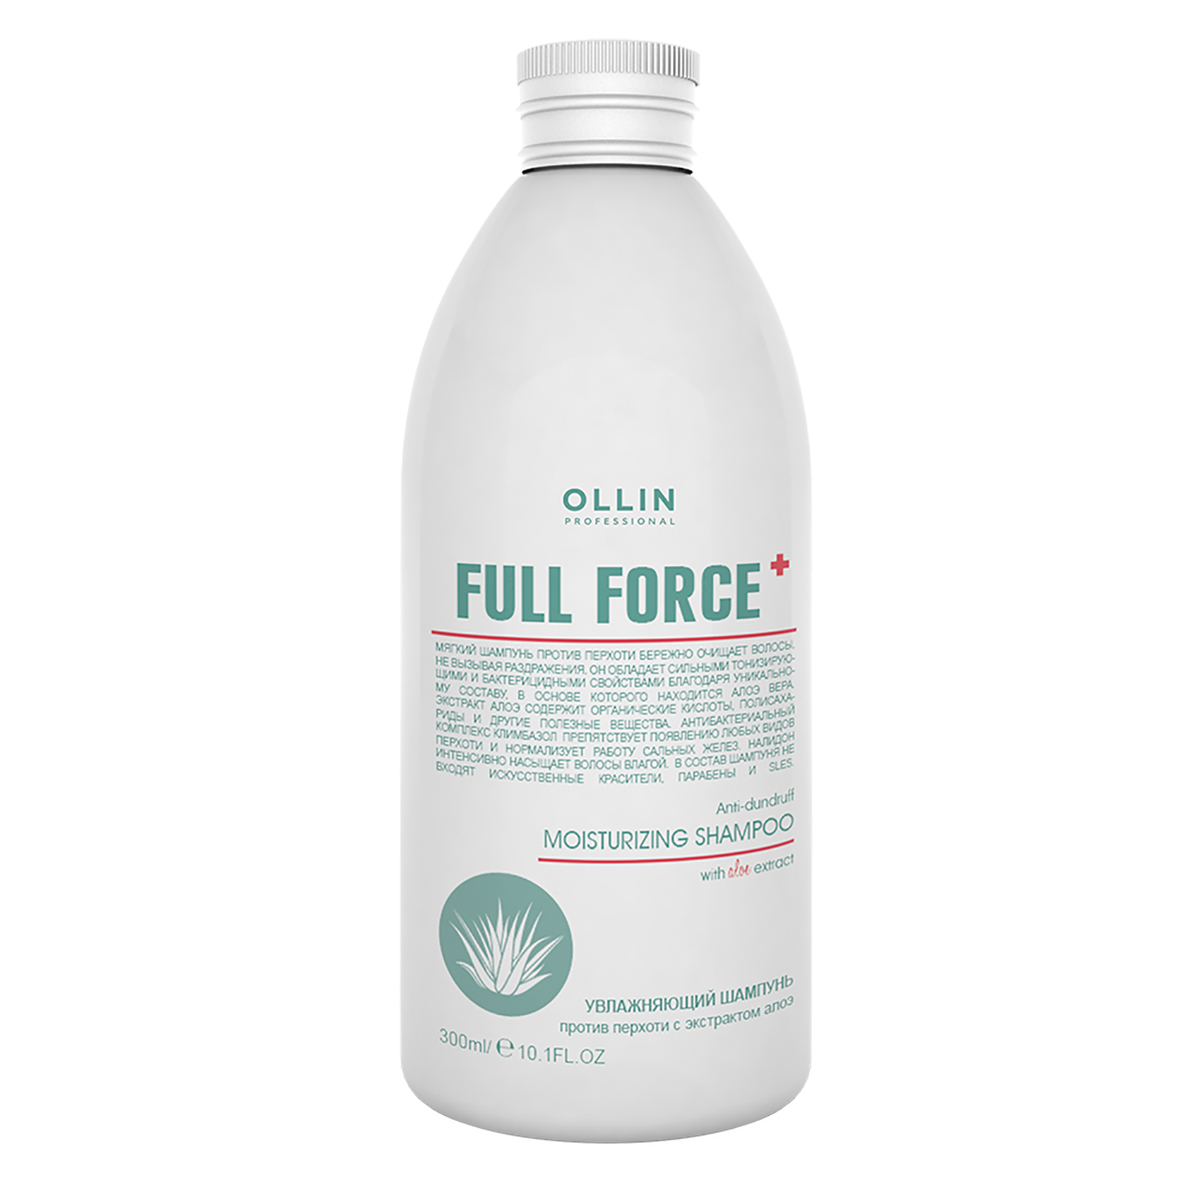 Full Force Увлажняющий шампунь против перхоти с экстрактом алоэ, 300 мл, OLLIN - фото 1